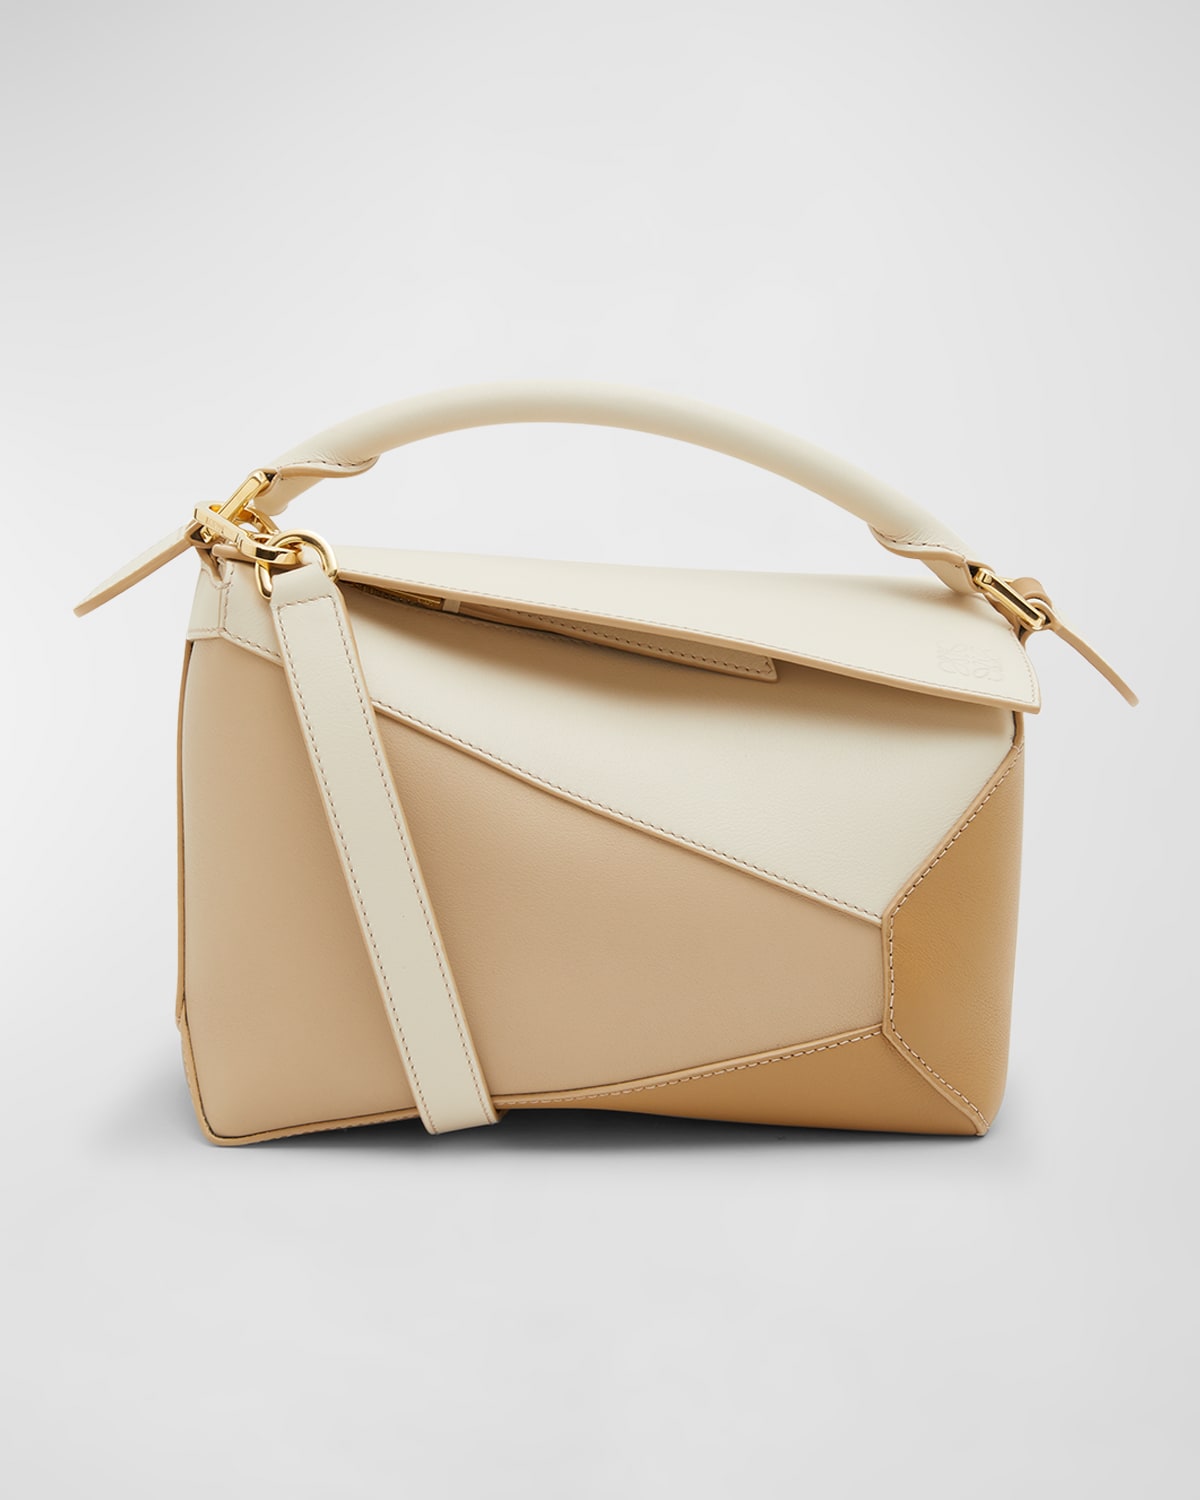 Premium Designer Handbags : Buy Designer Bags & Handbags Online